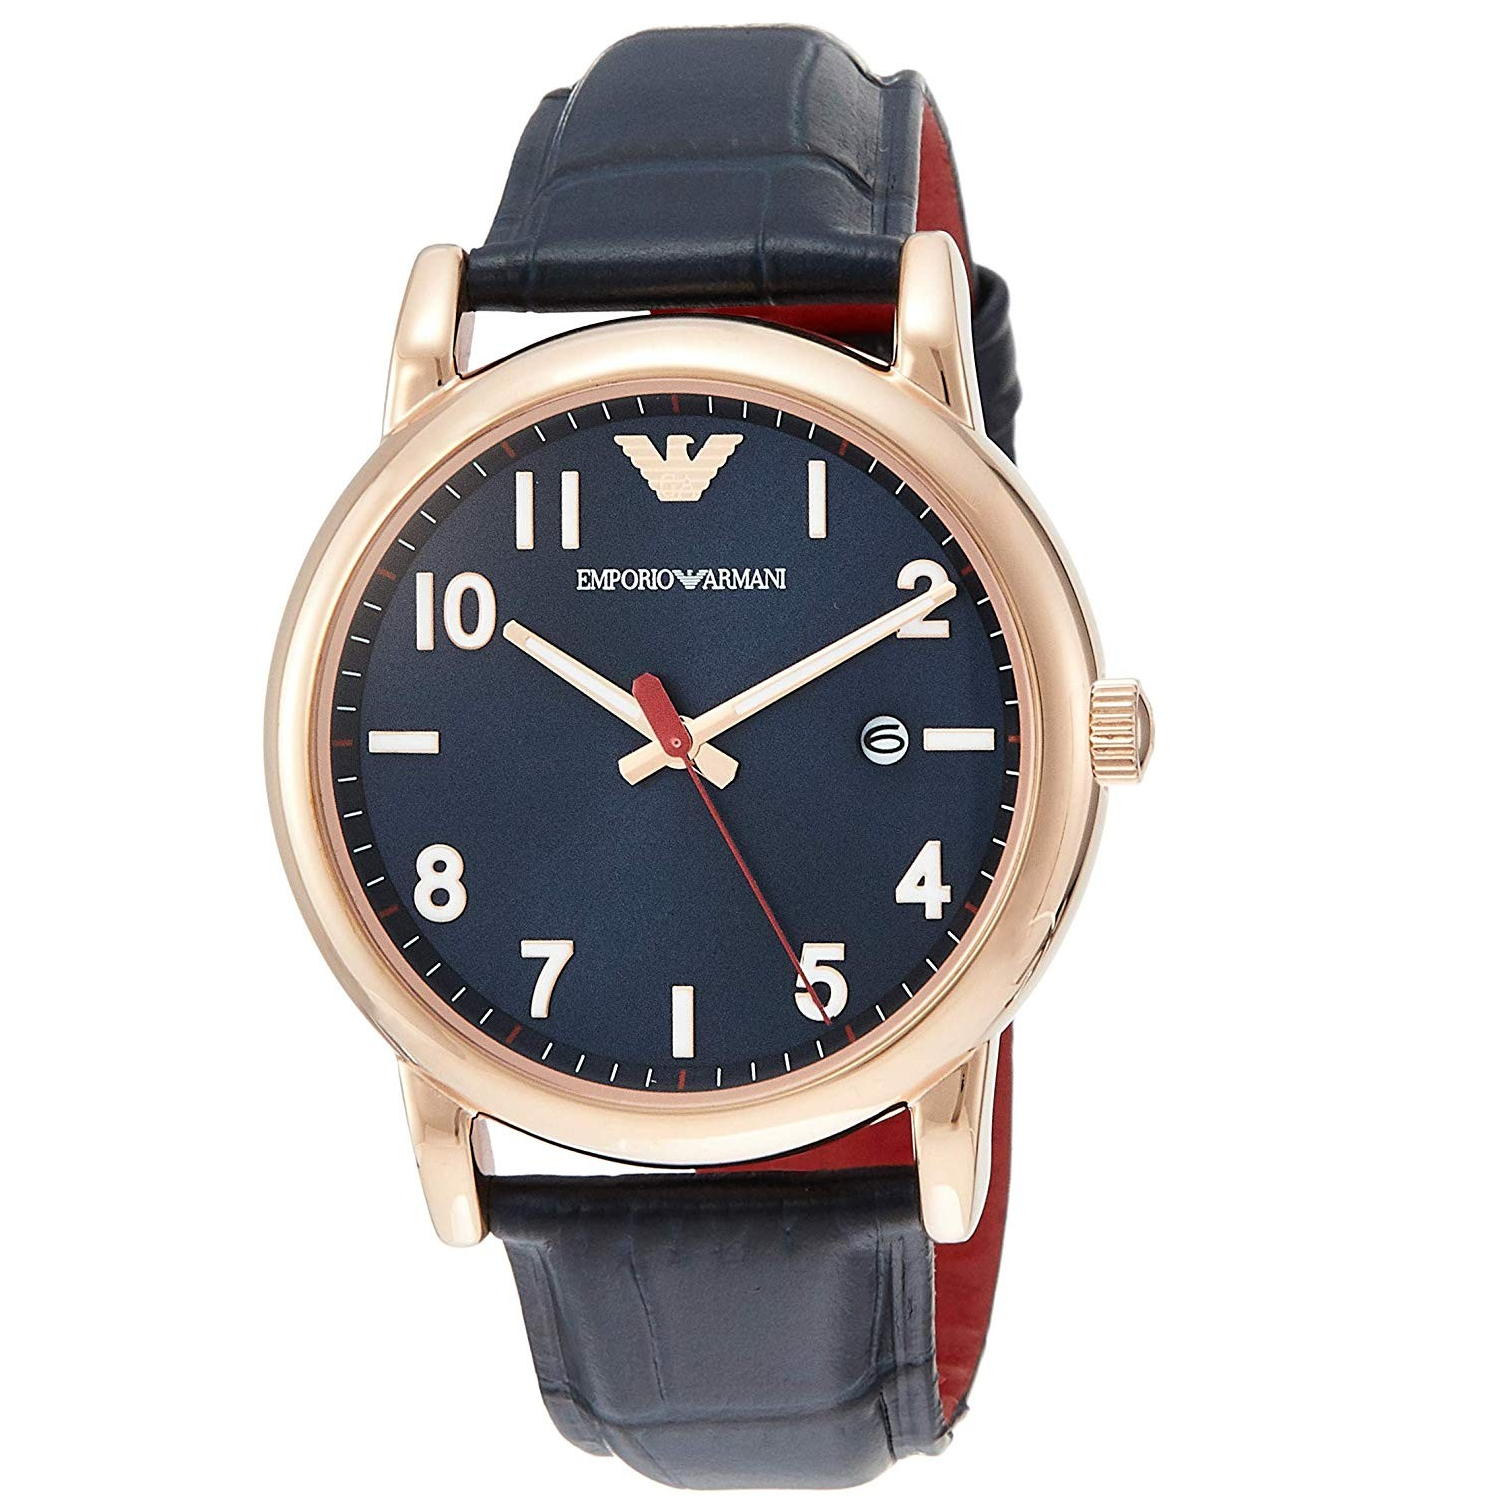 EMPORIO ARMANI 亞曼尼 手錶 43mm 真皮錶帶 男錶 腕錶 AR11135 深藍色(現貨)